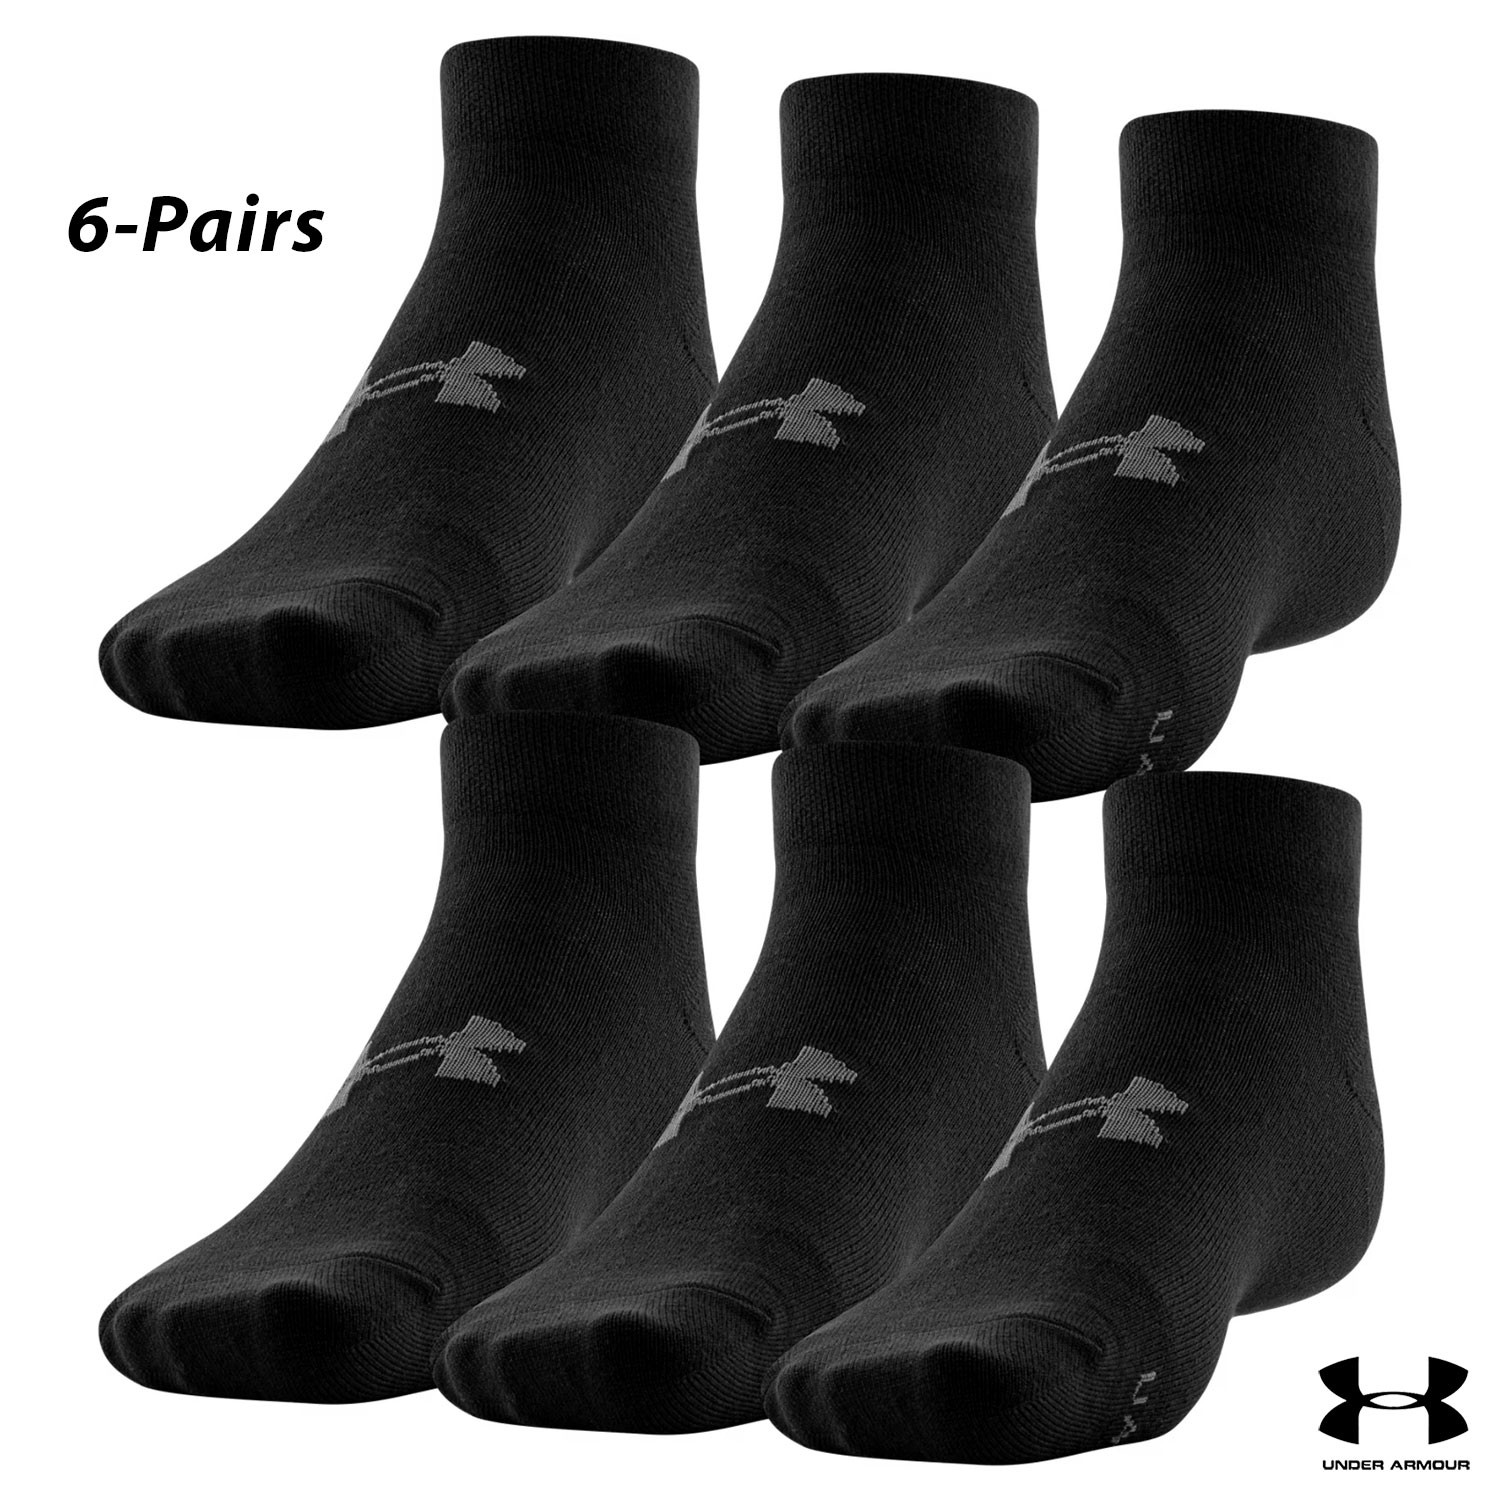 6-Pairs Under Armour Essential Lite Low Cut Socks (L, Black) $9.90 + F/S on $25+